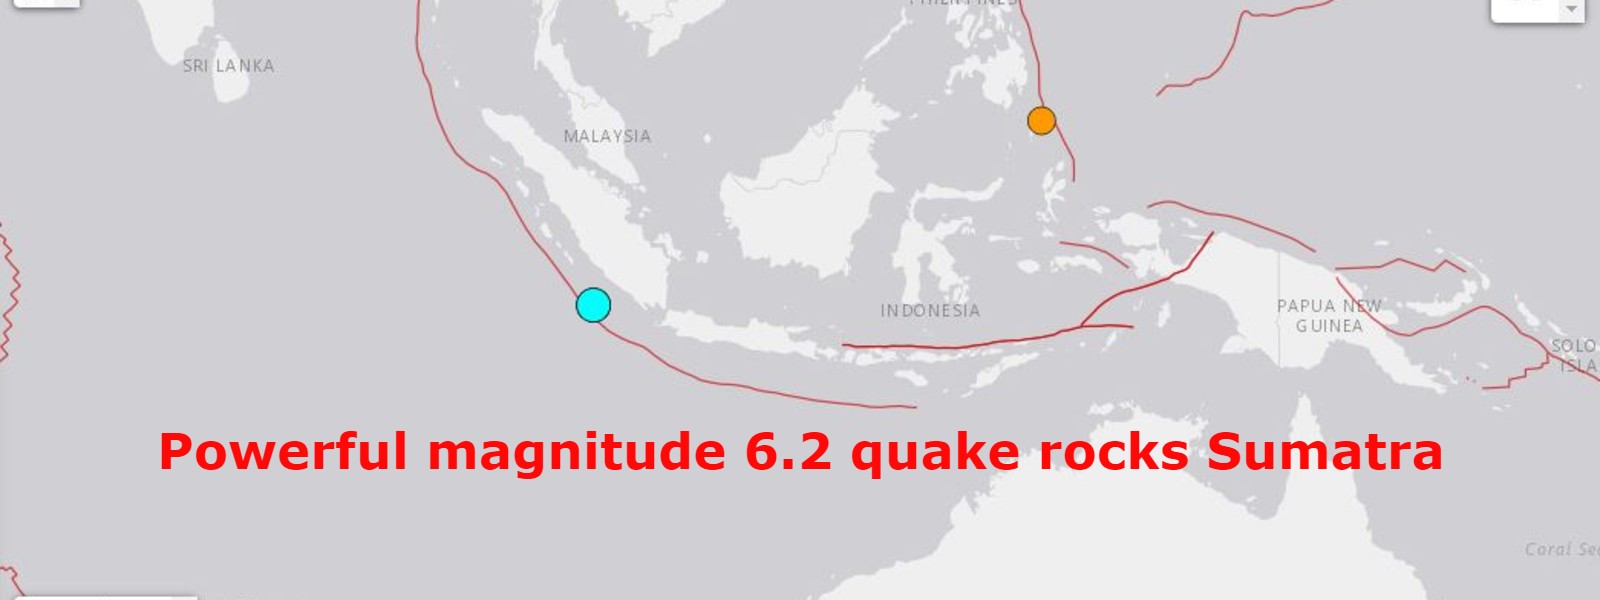 Powerful magnitude 6.2 quake rocks Sumatra